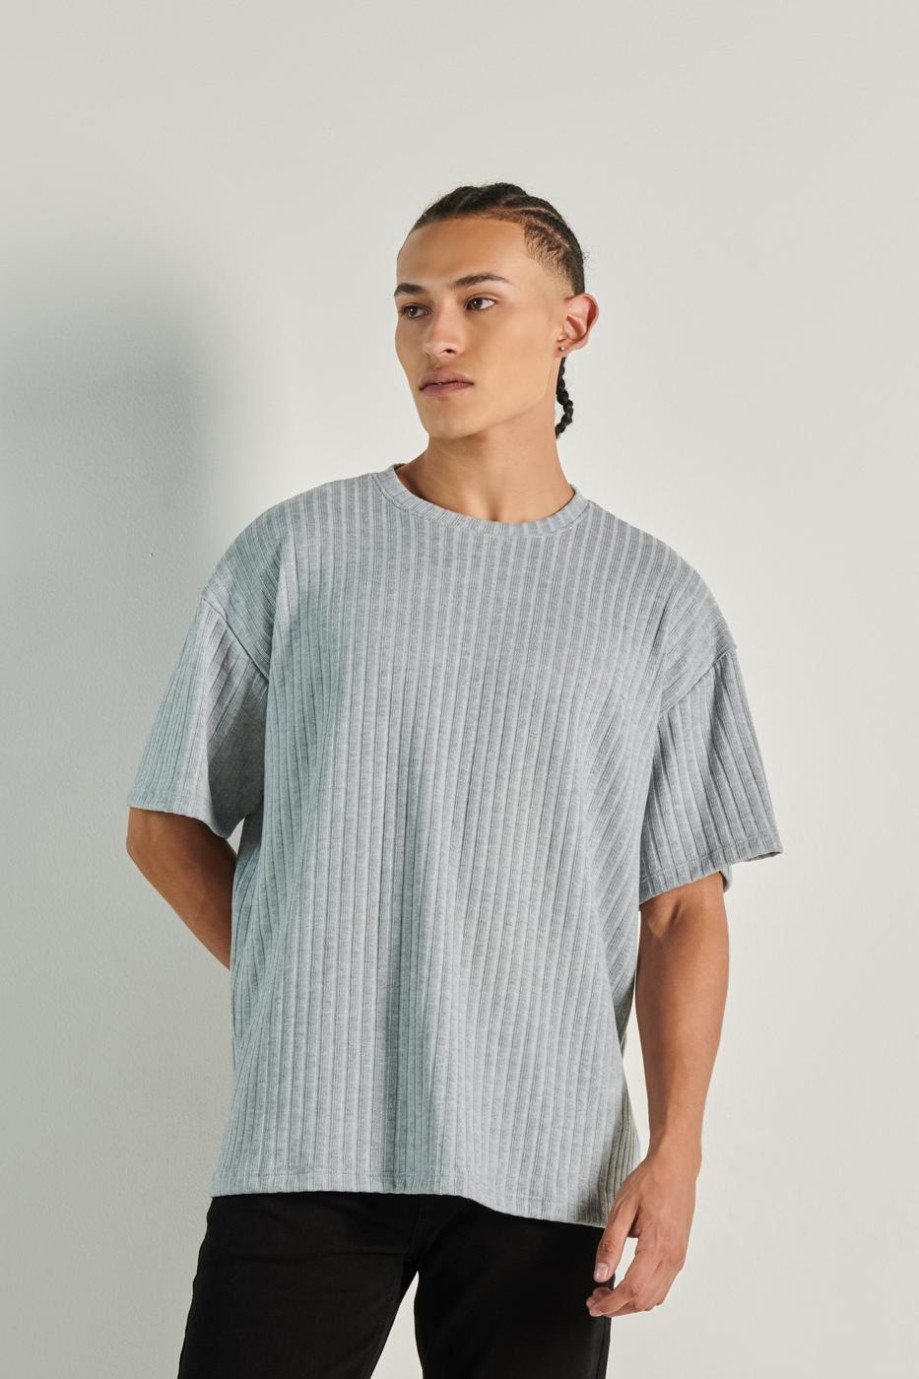 Camiseta oversize gris clara con cuello redondo y texturas de canal